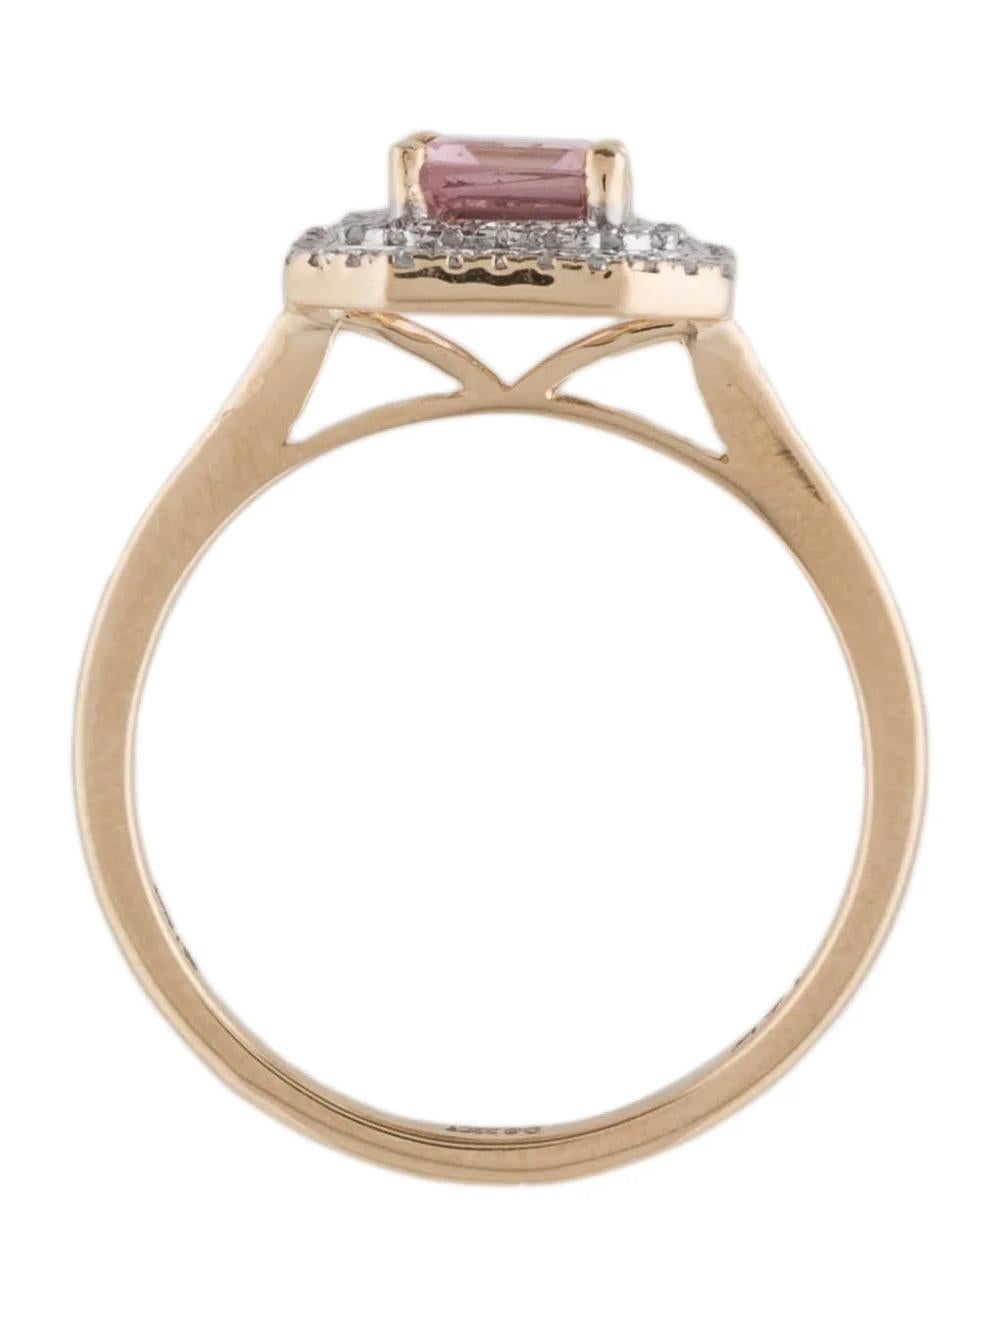 Women's 14K Tourmaline Diamond Cocktail Ring - Vintage Style, Luxury Jewelry, - Size 6.5 For Sale